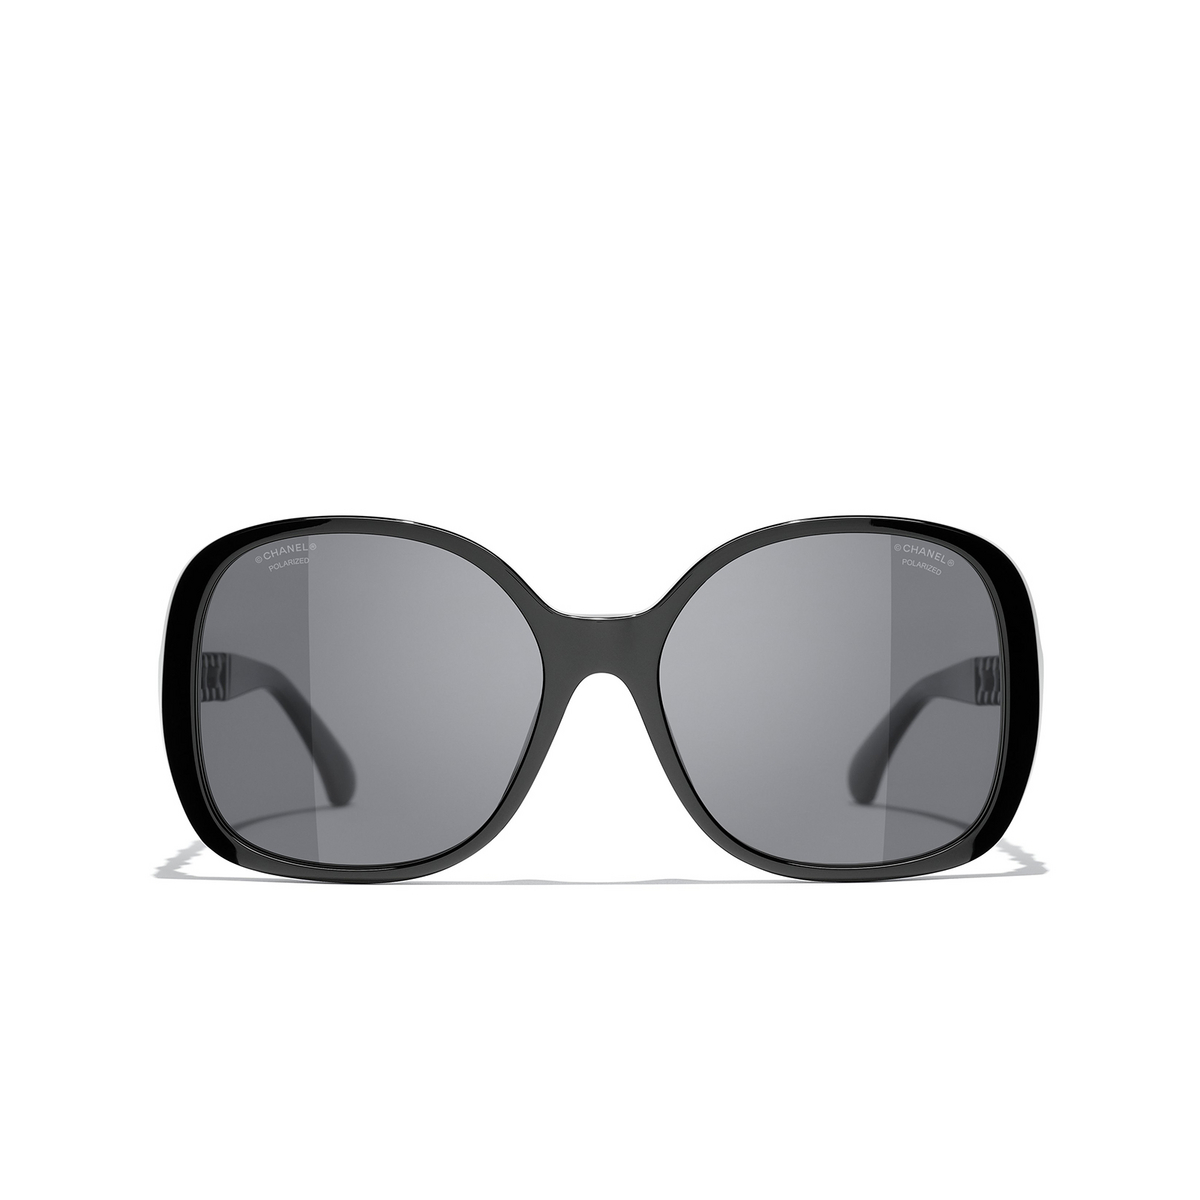 CHANEL square Sunglasses C888T8 Black - front view